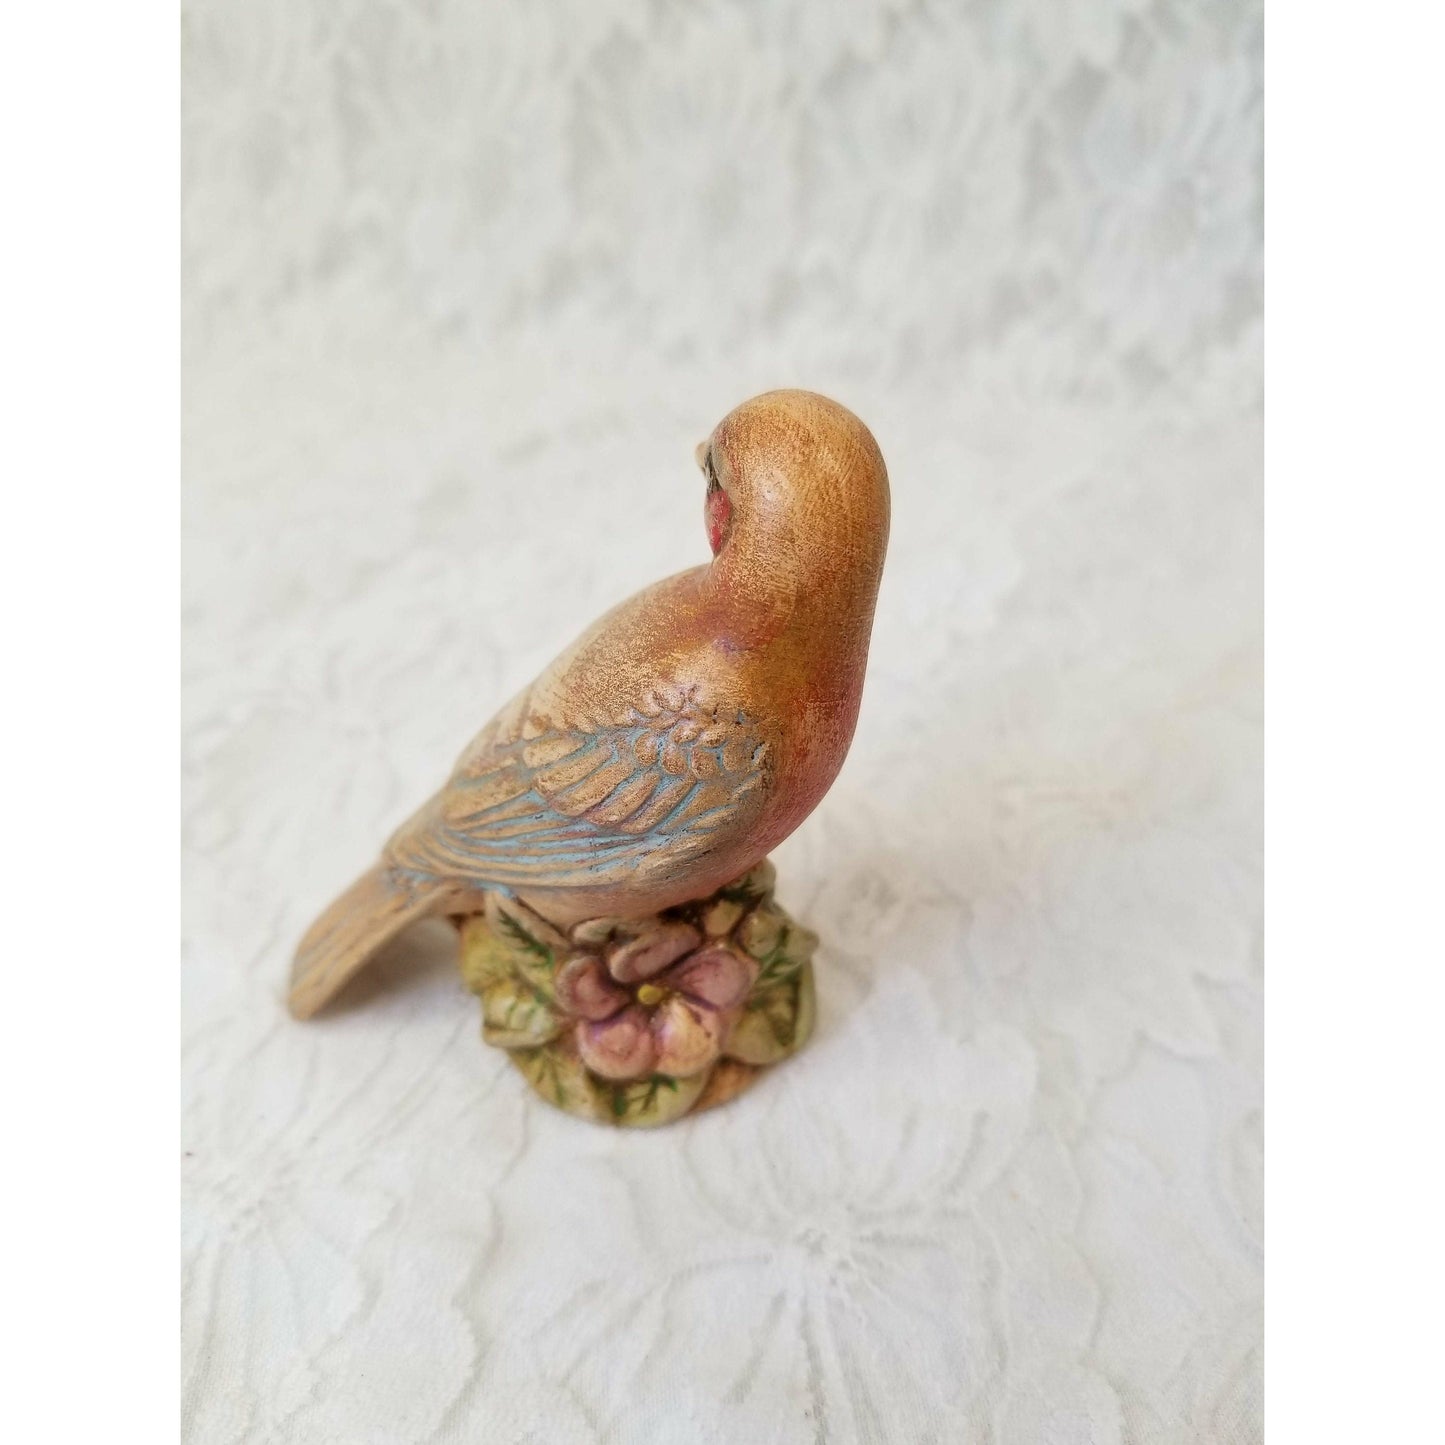 Vintage Handmade Porcelain Ceramic 3" by 2.5" Bird Figurine ~ Bird Art ~ Art Pottery ~ OOAK Art